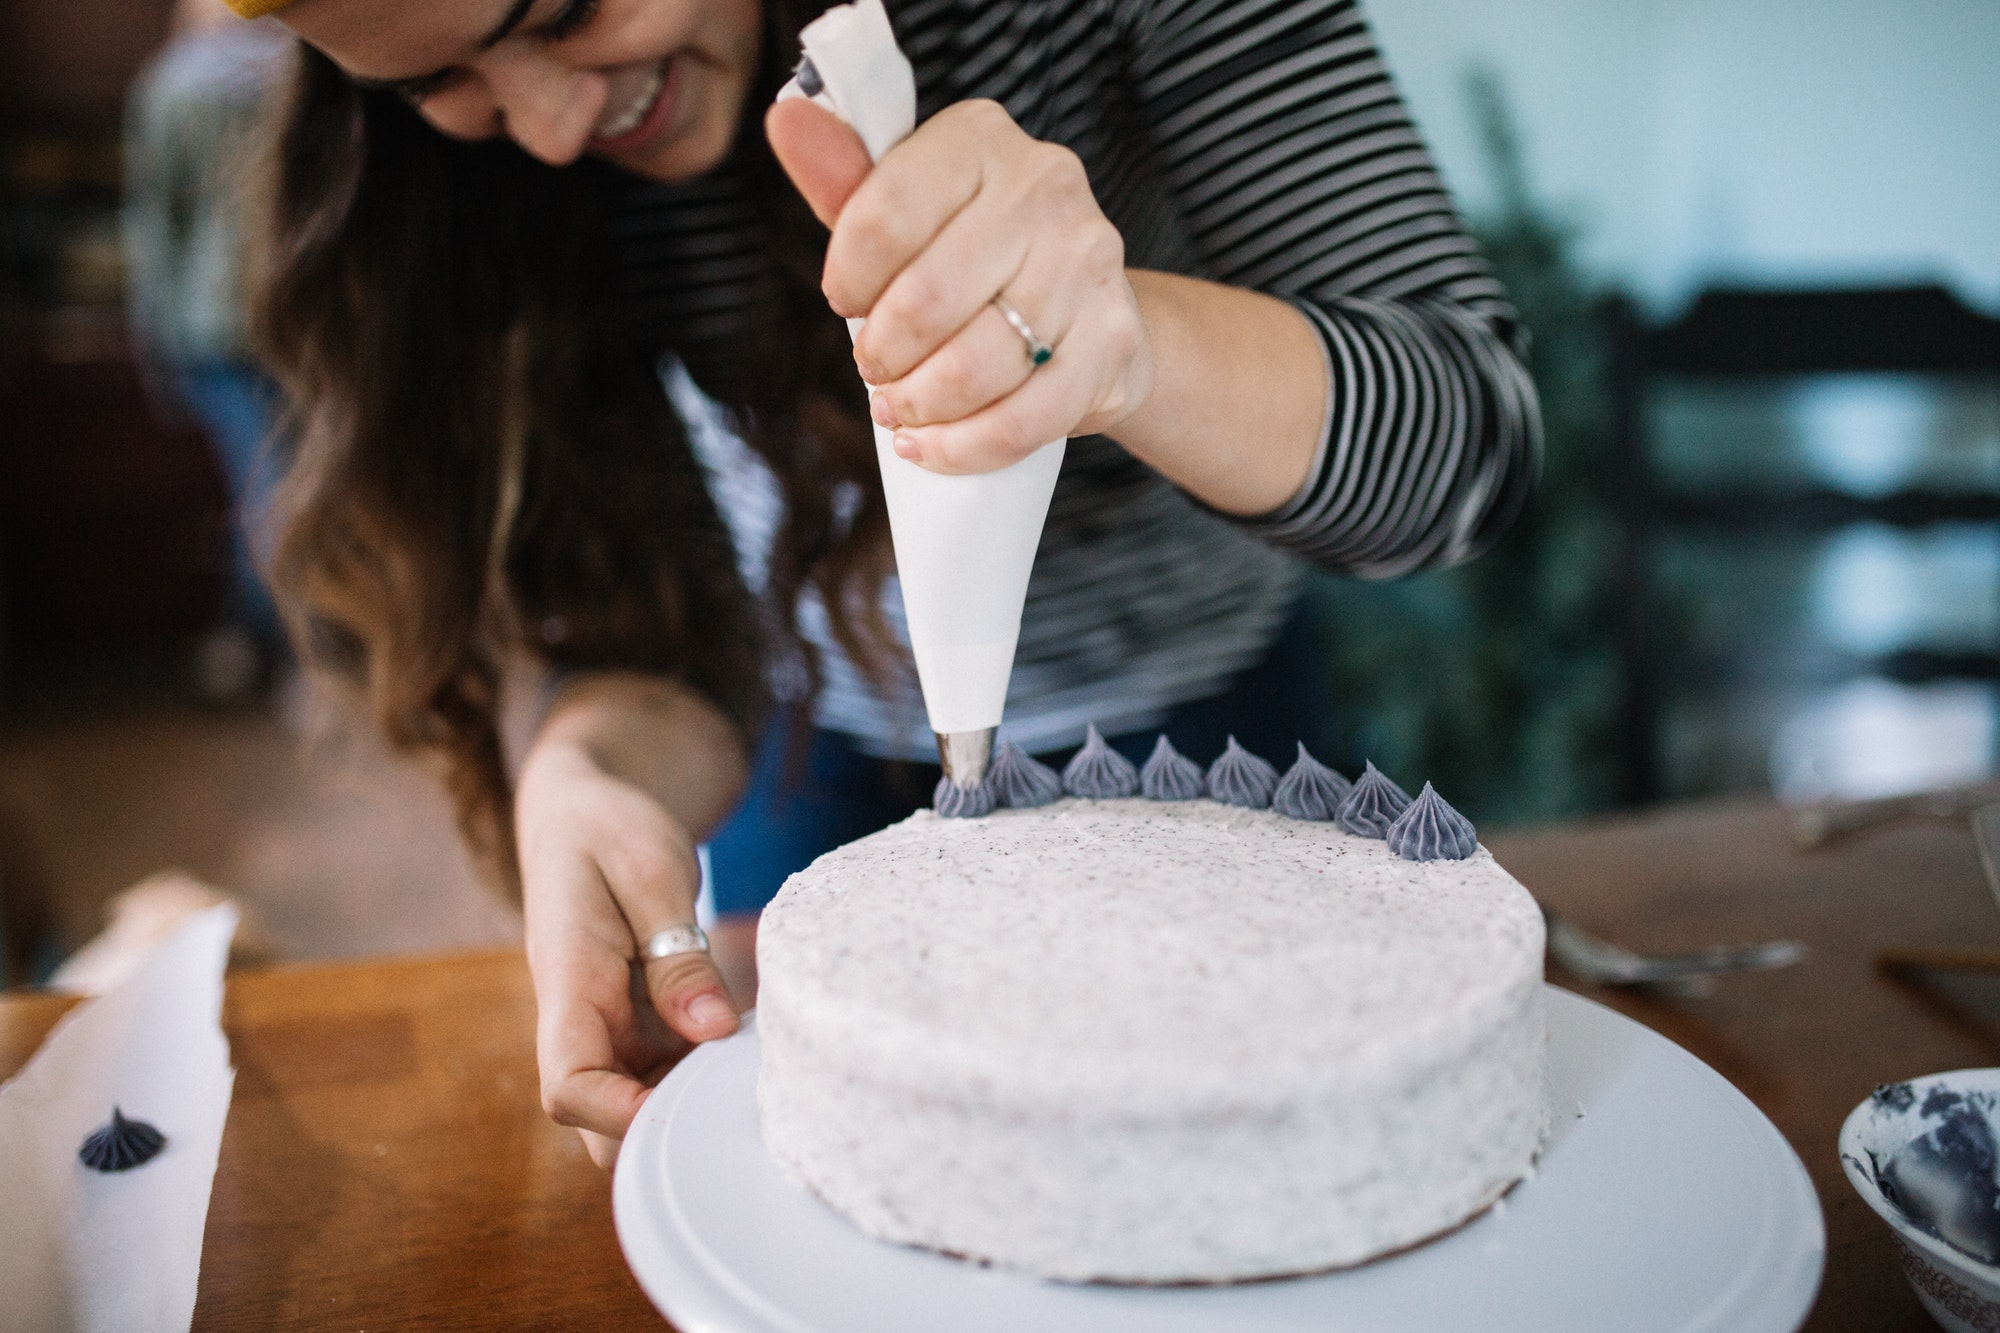 Decorating a cake